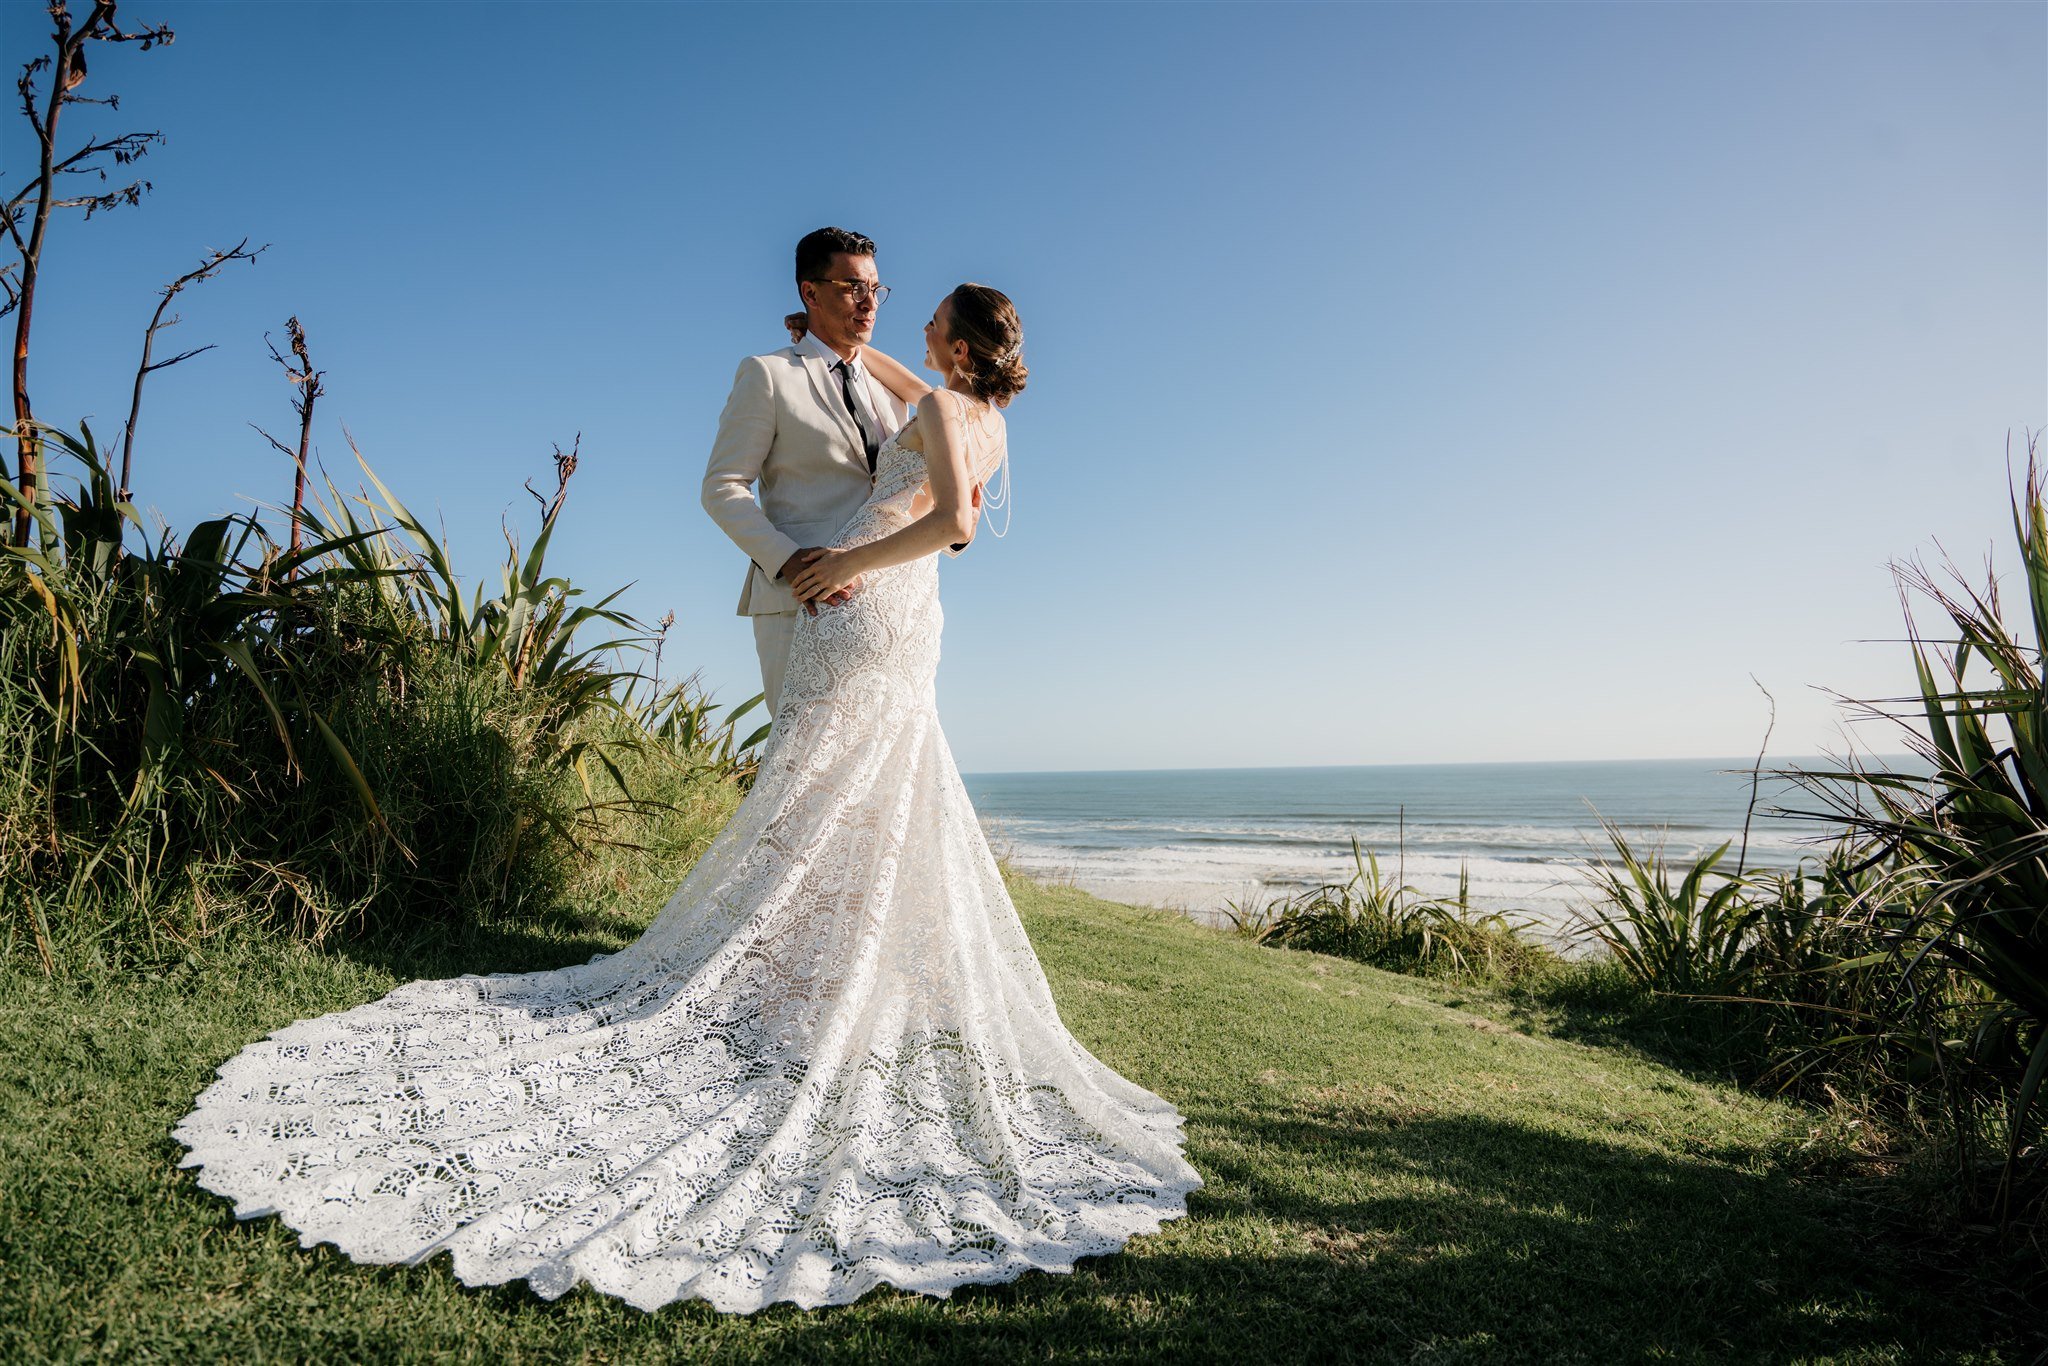 castaways-NZ-new-zealand-auckland-wedding-photographer-photography-videography-film-dear-white-productions-best-venue-waiuku-engagement-elopement-style-beach-intimate (249).jpg